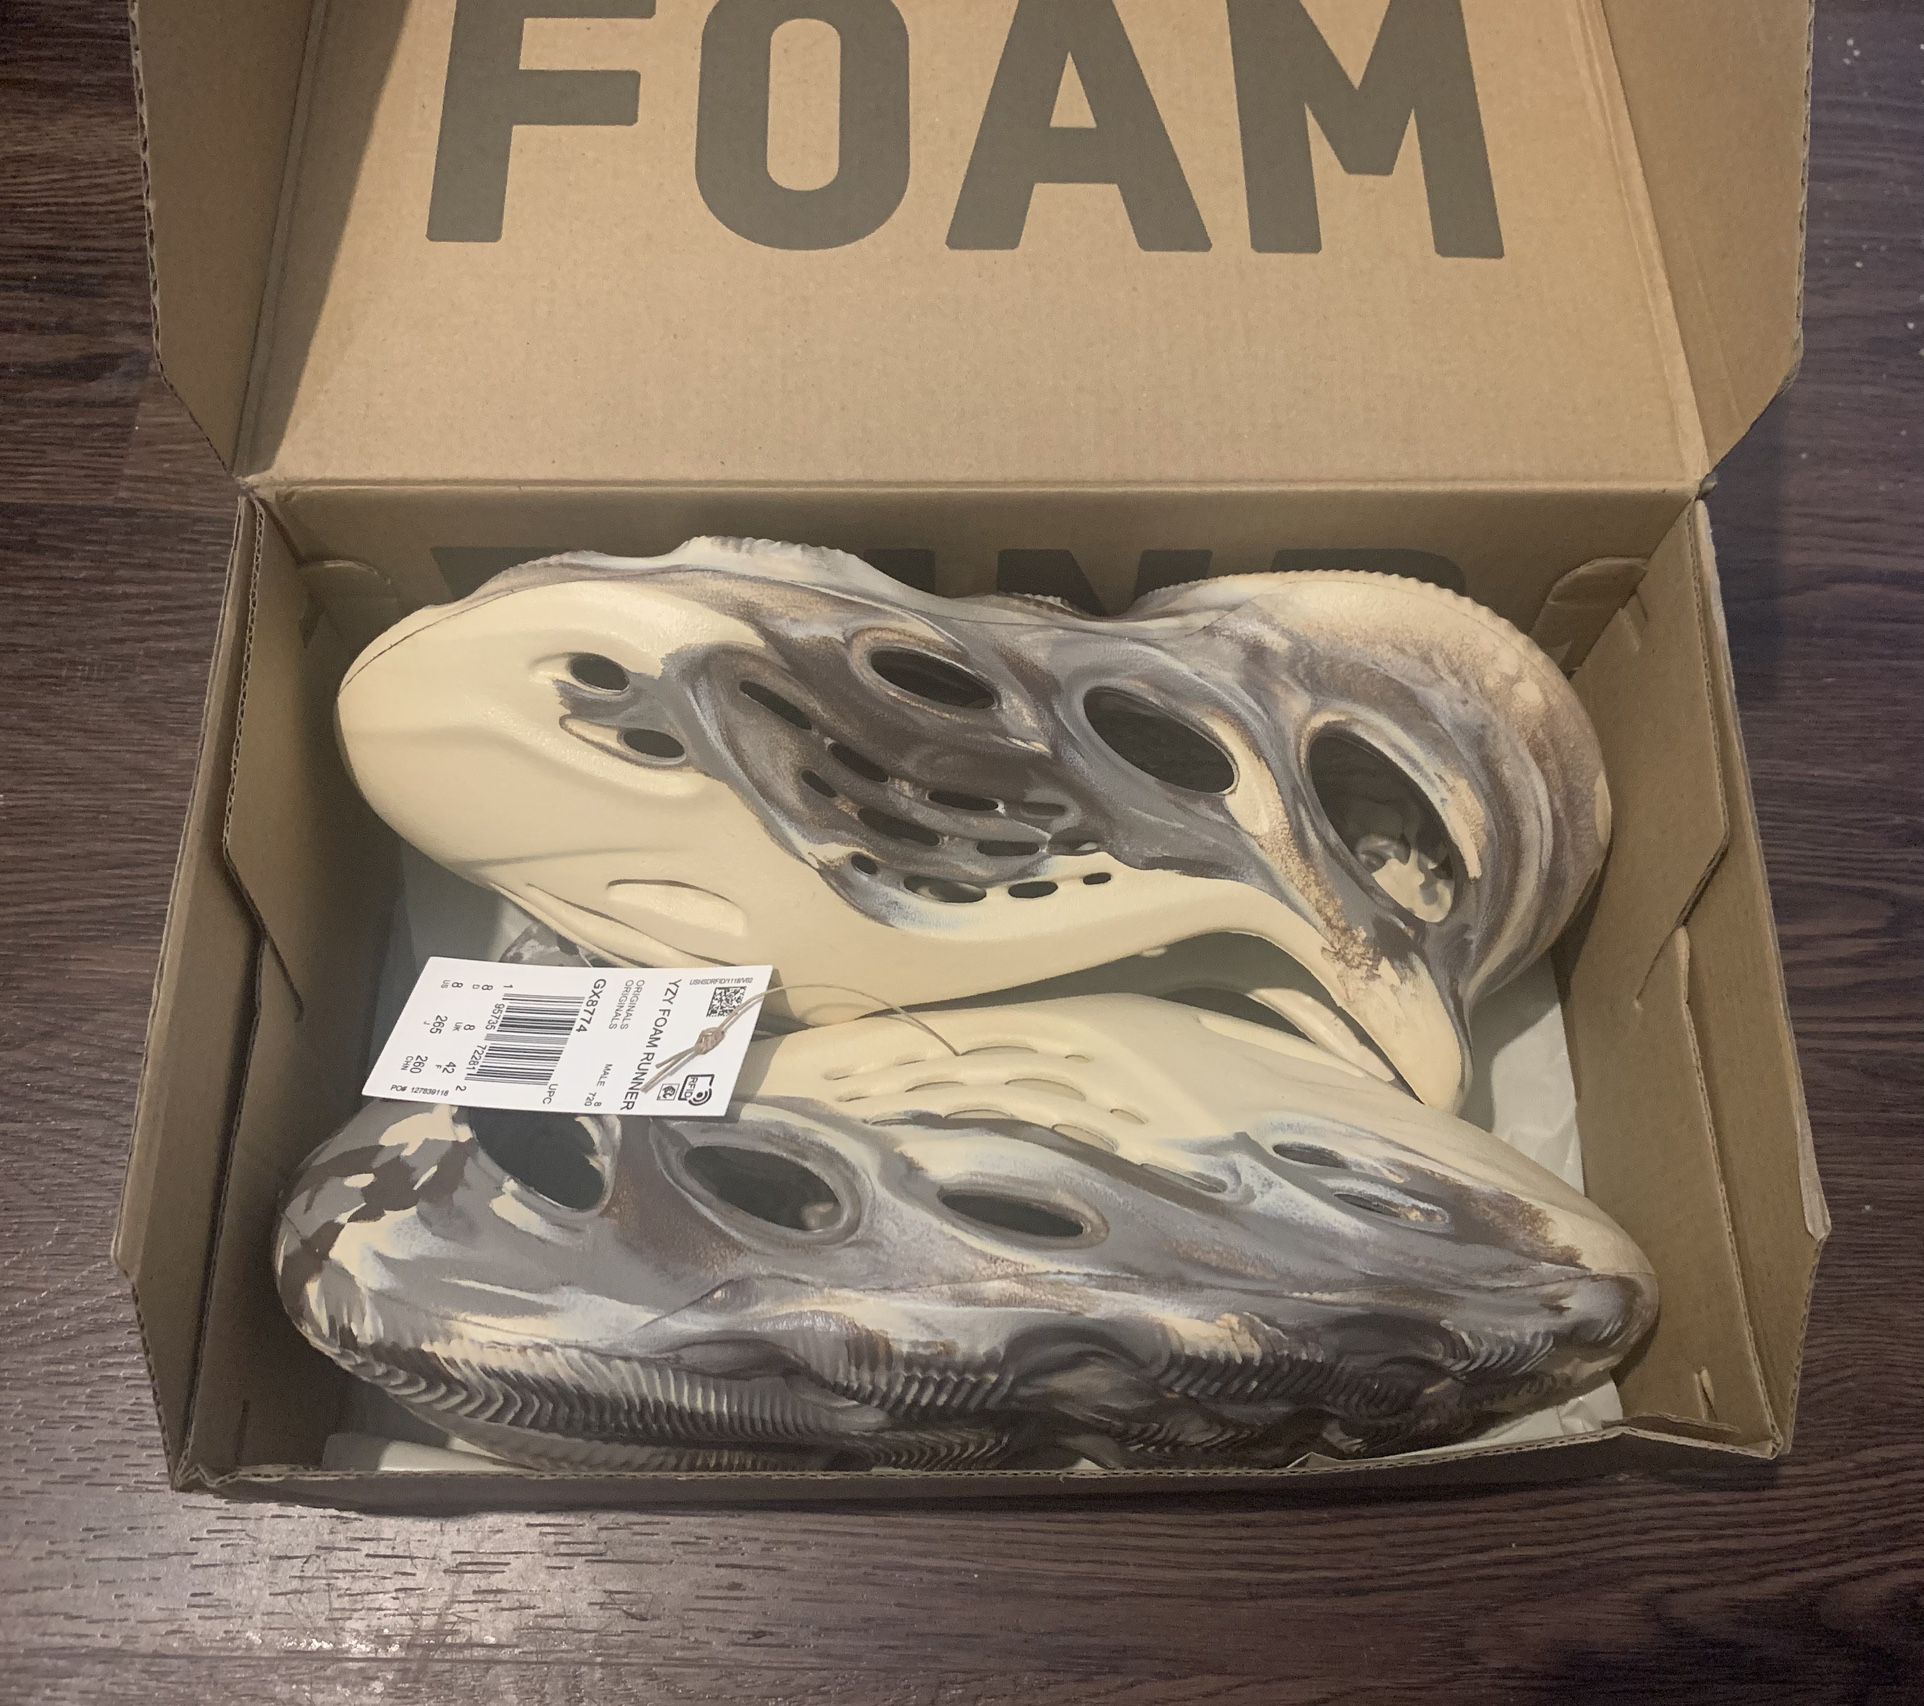 Buy Yeezy Foam Runner 'MX Cream Clay' - GX8774